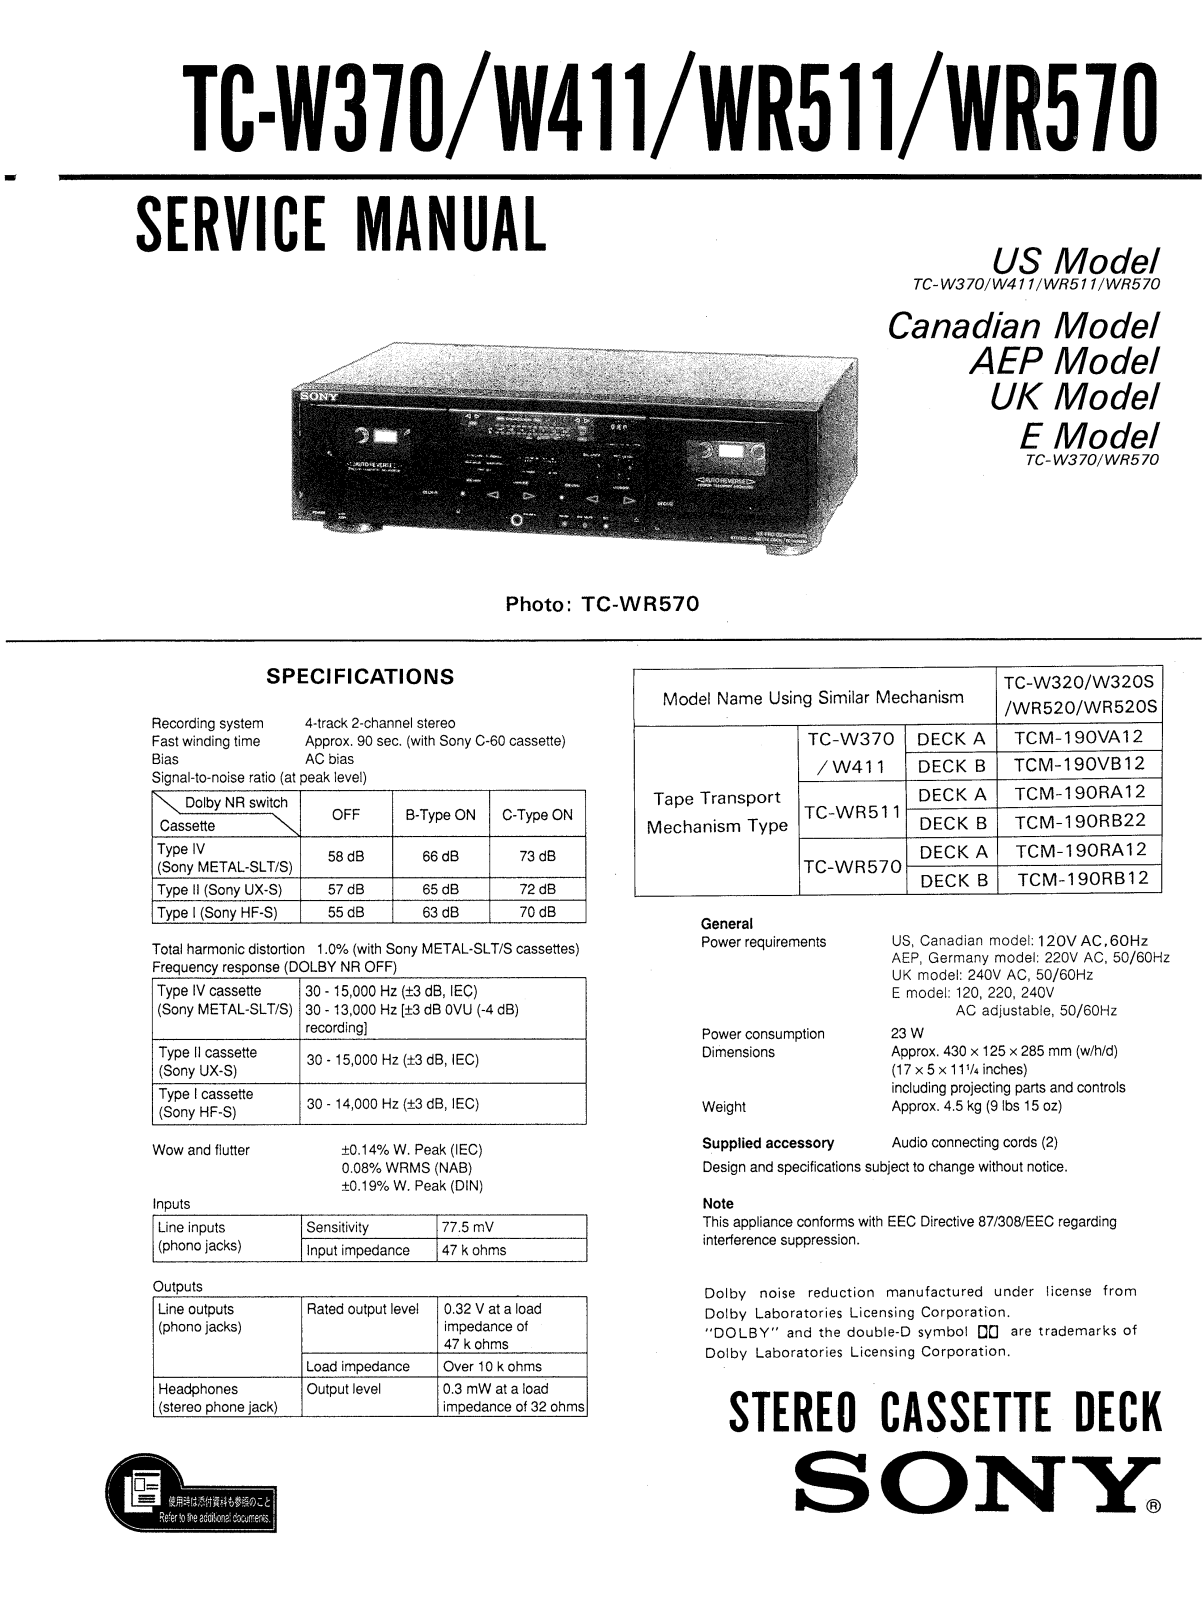 Sony TCWR-511 Service manual